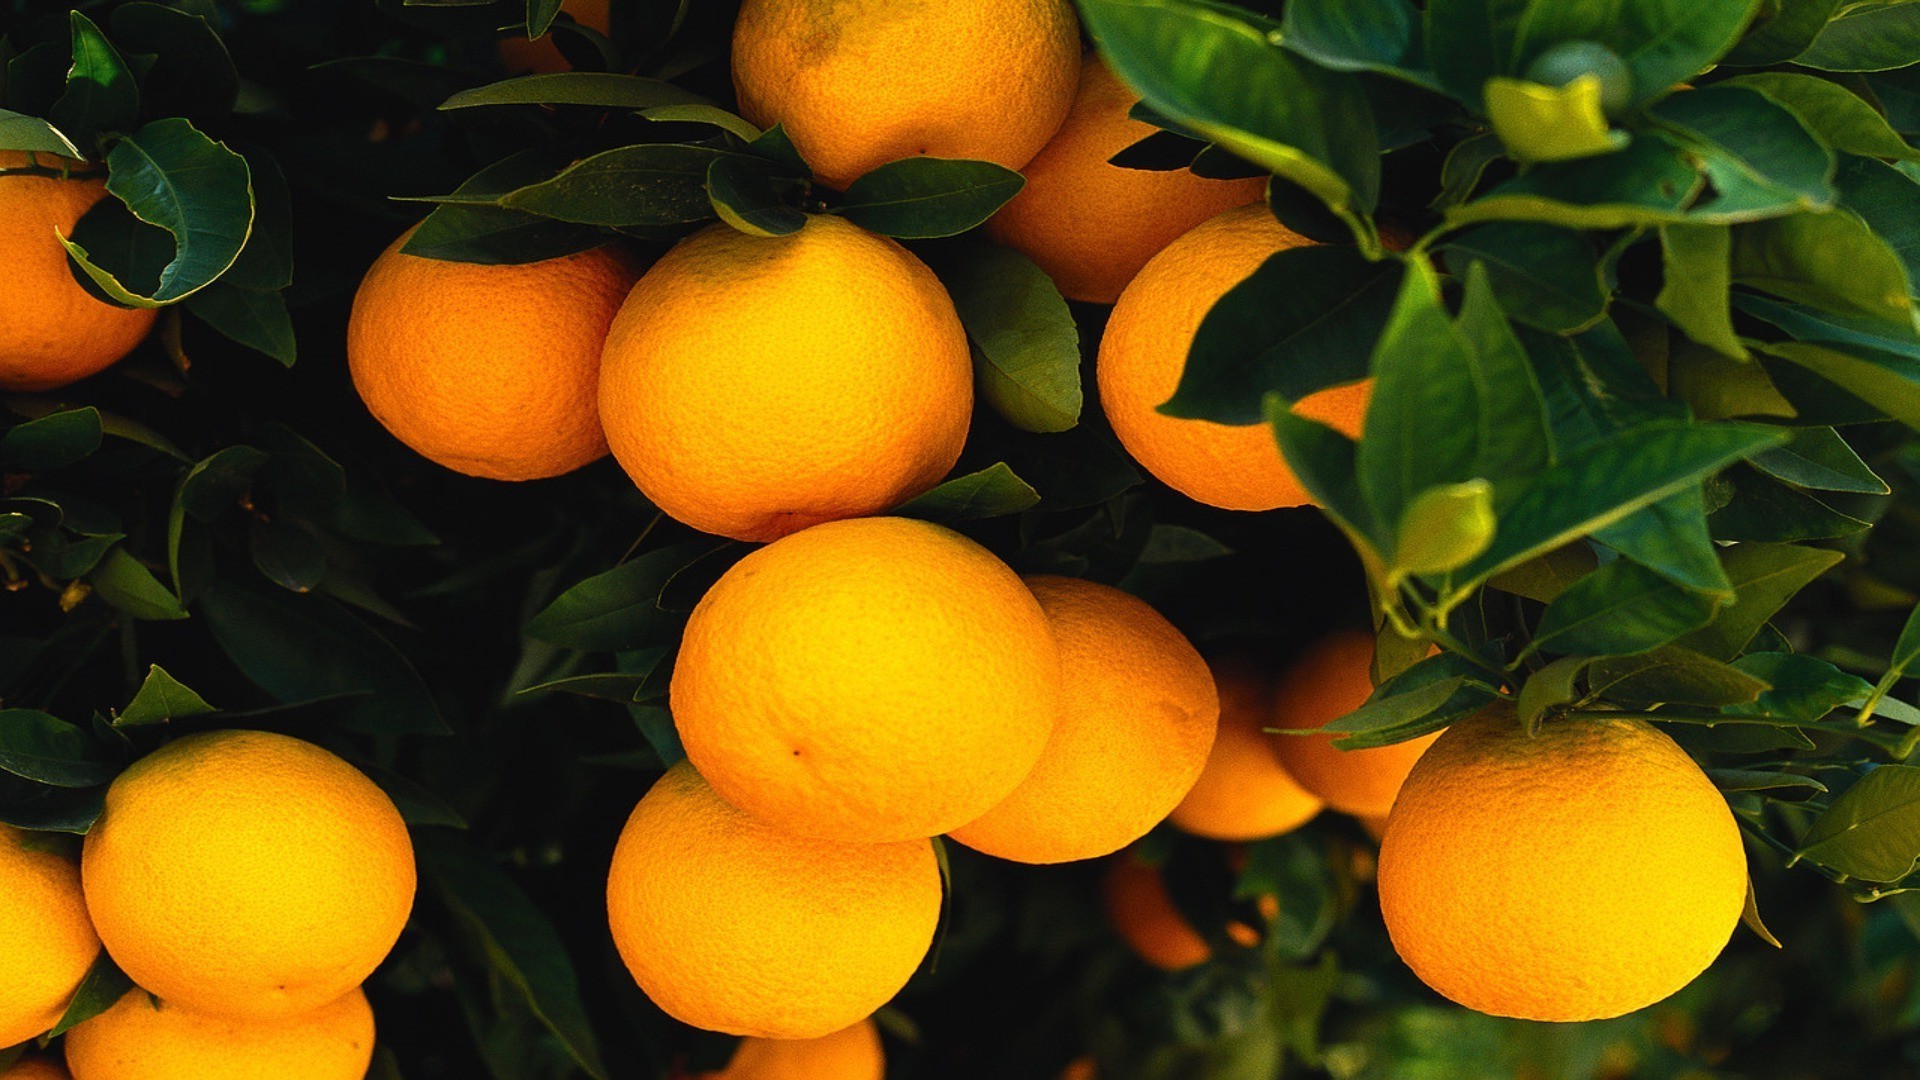 fruit citrus juicy leaf food nature juice health tropical mandarin color healthy garden confection grow summer market tangerine freshness